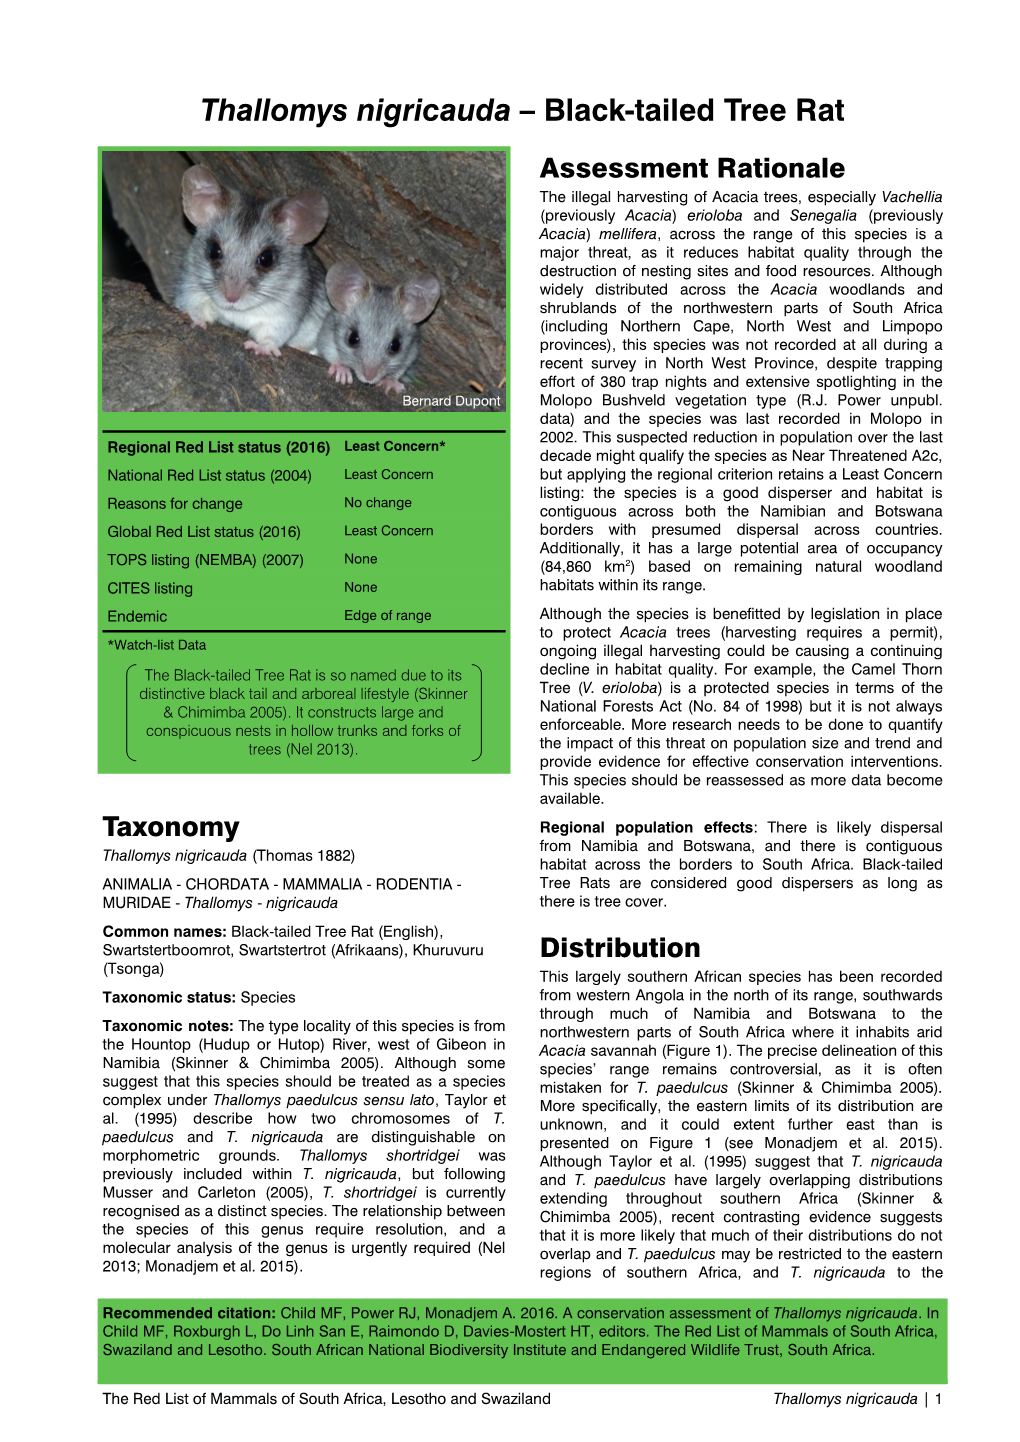 Thallomys Nigricauda – Black-Tailed Tree Rat